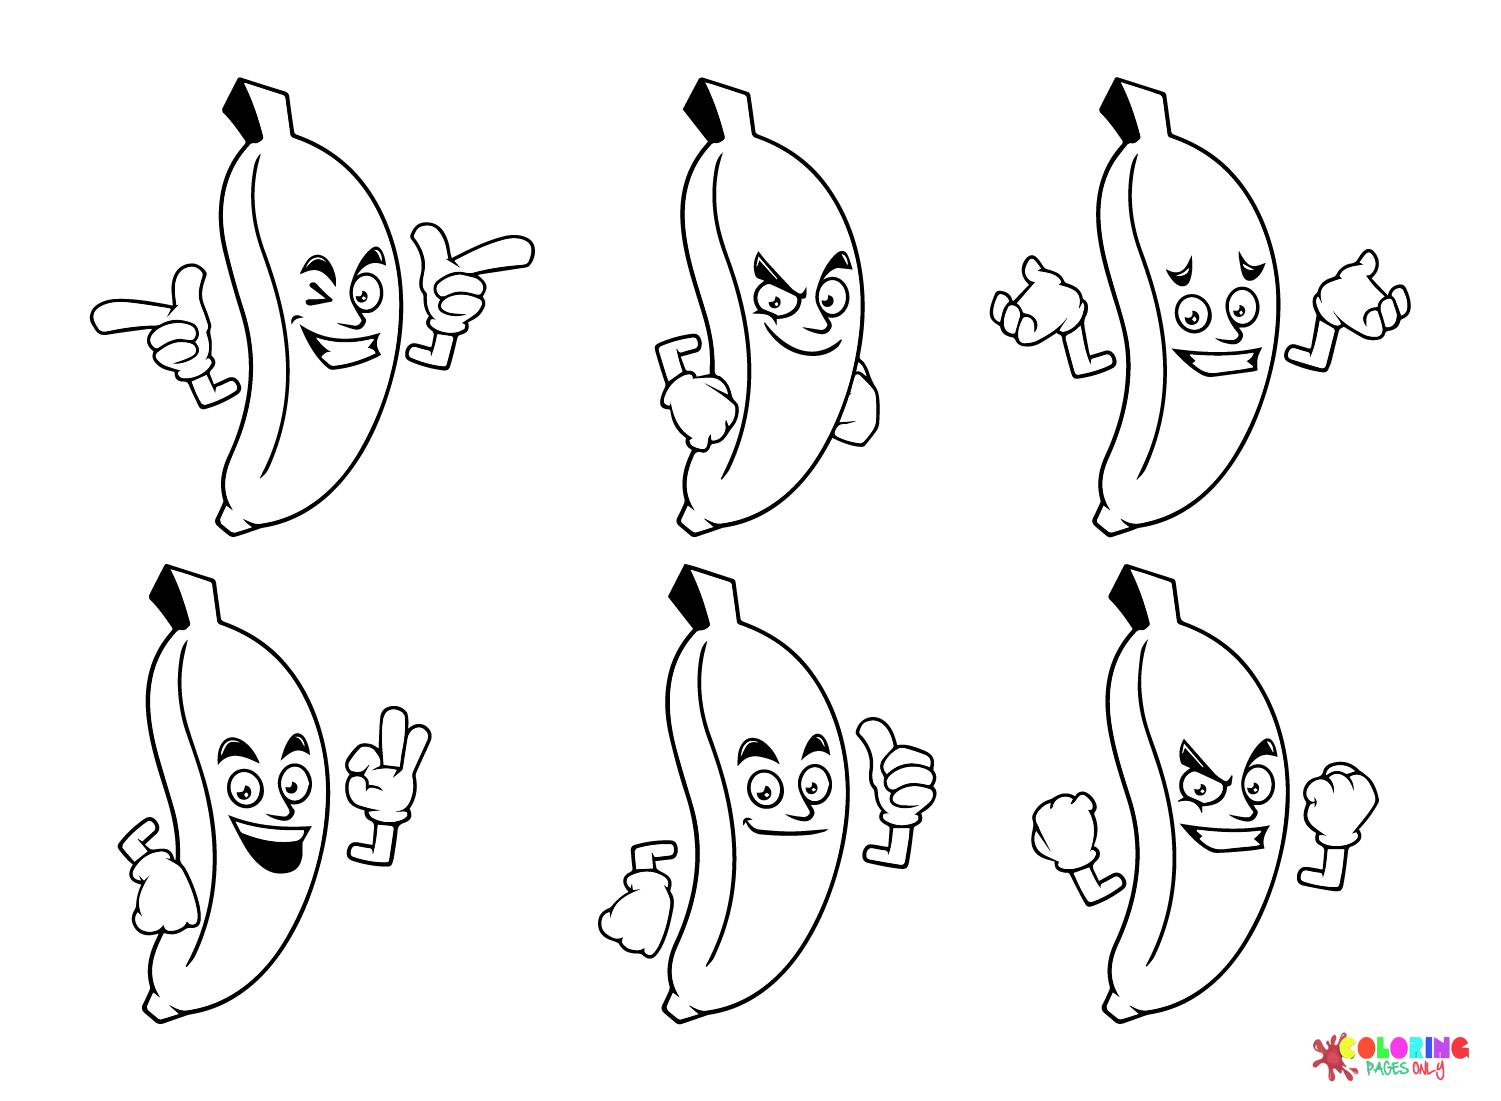 Banana mascotte di Bananas